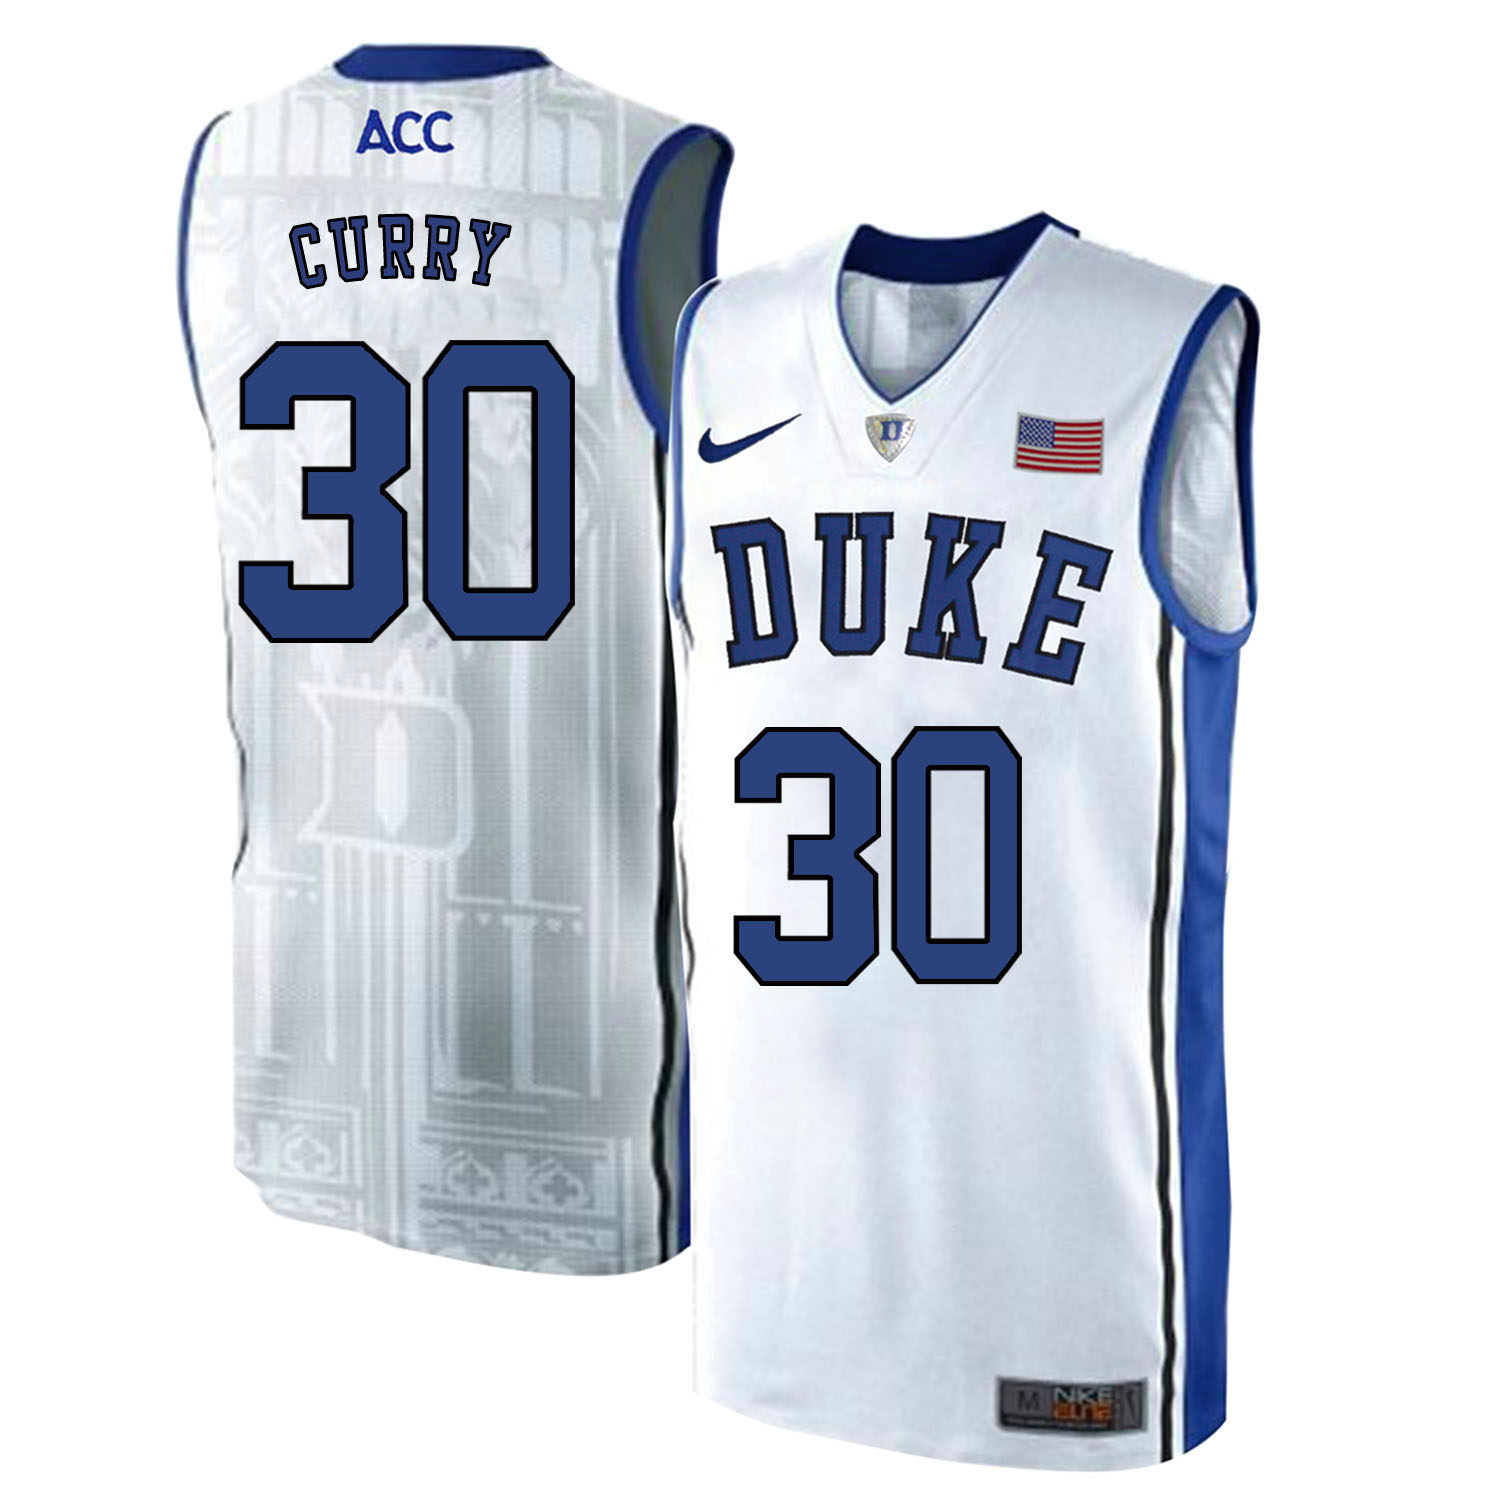 Duke Blue Devils 30 Seth Curry White Elite Nike College Basketball Jersey